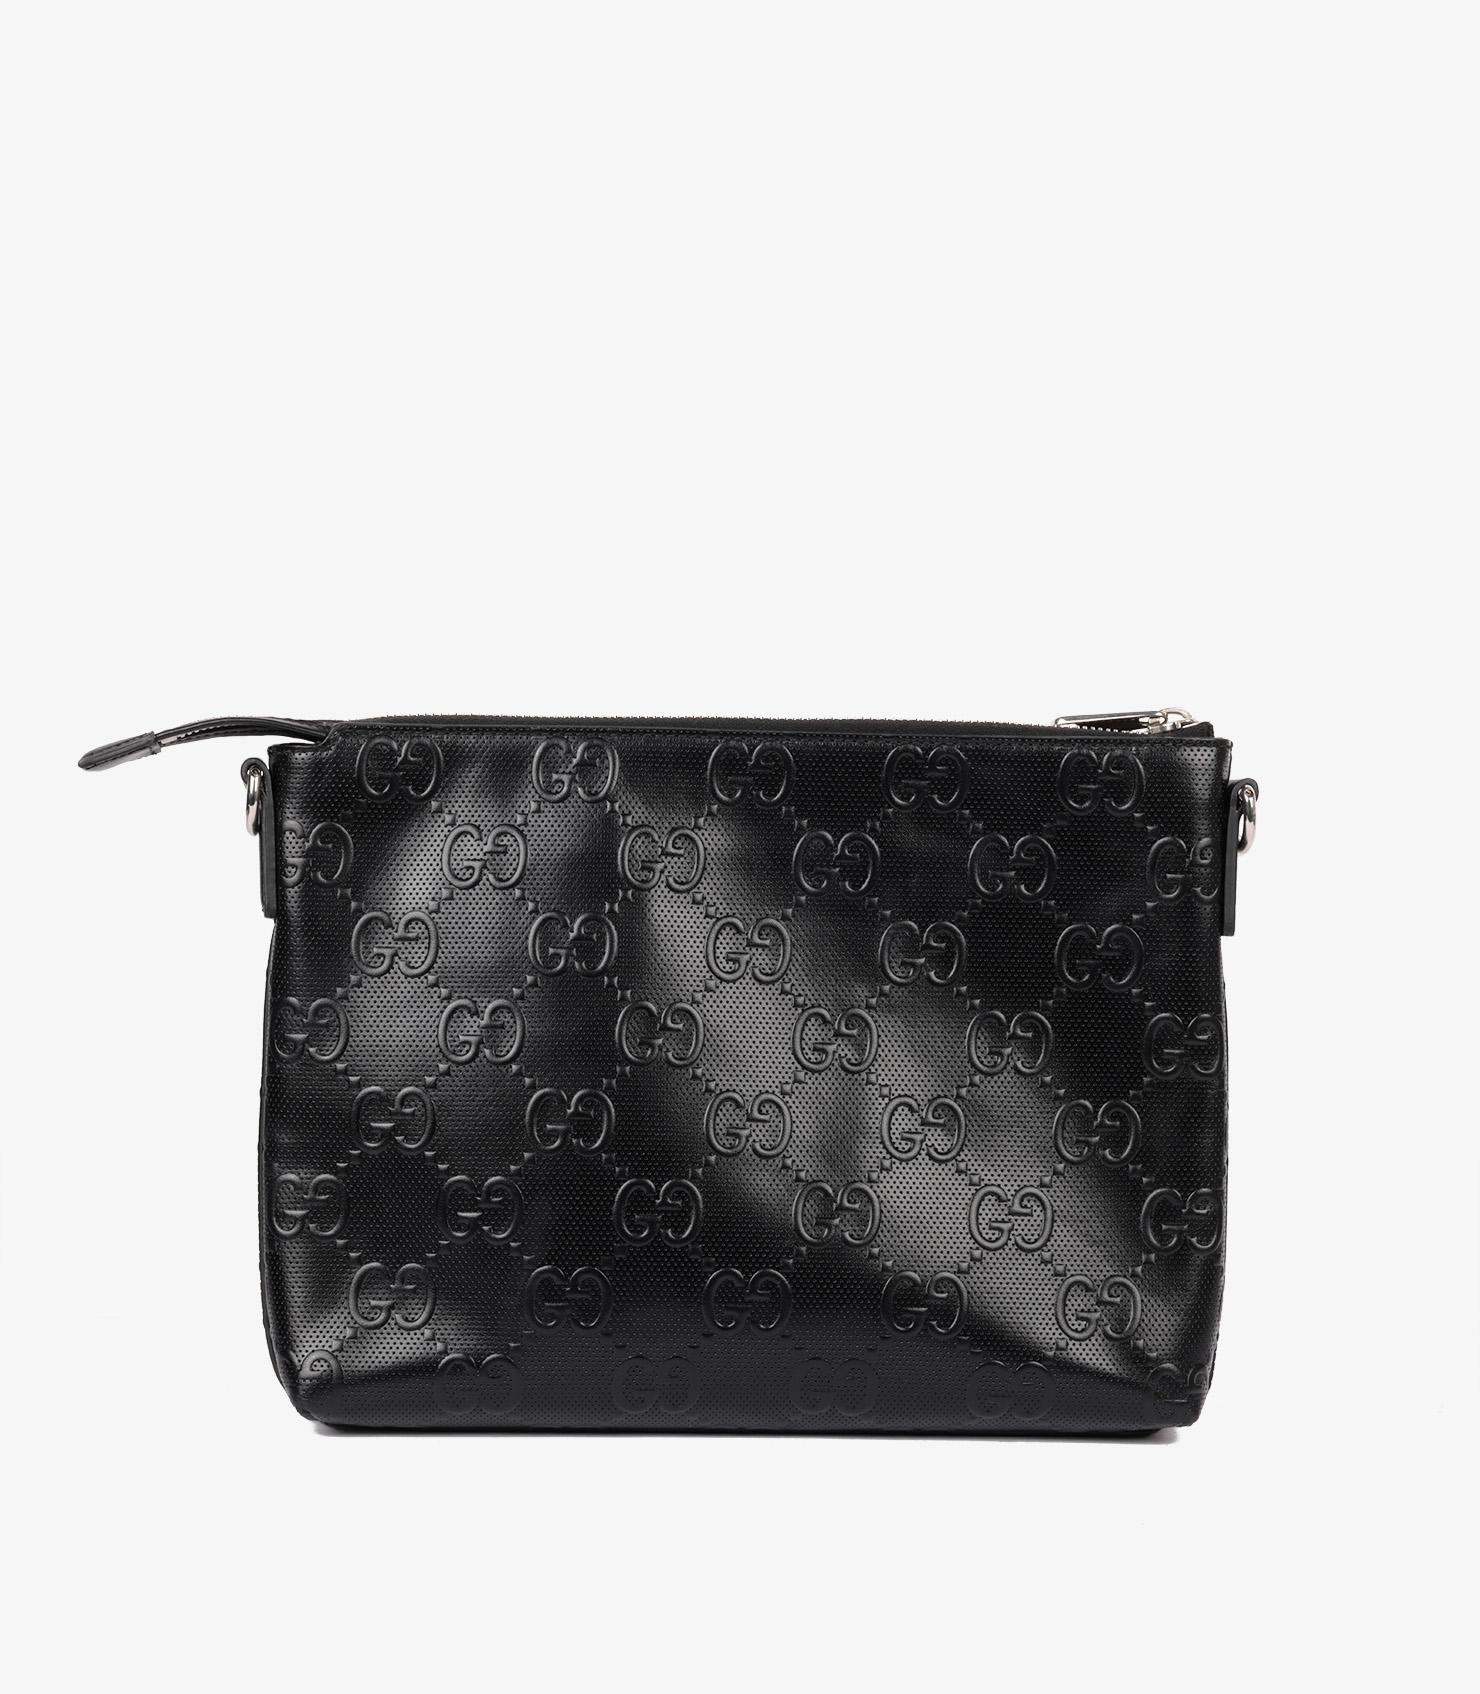 Gucci GG Black Embossed Leather Medium Messenger Bag For Sale 2